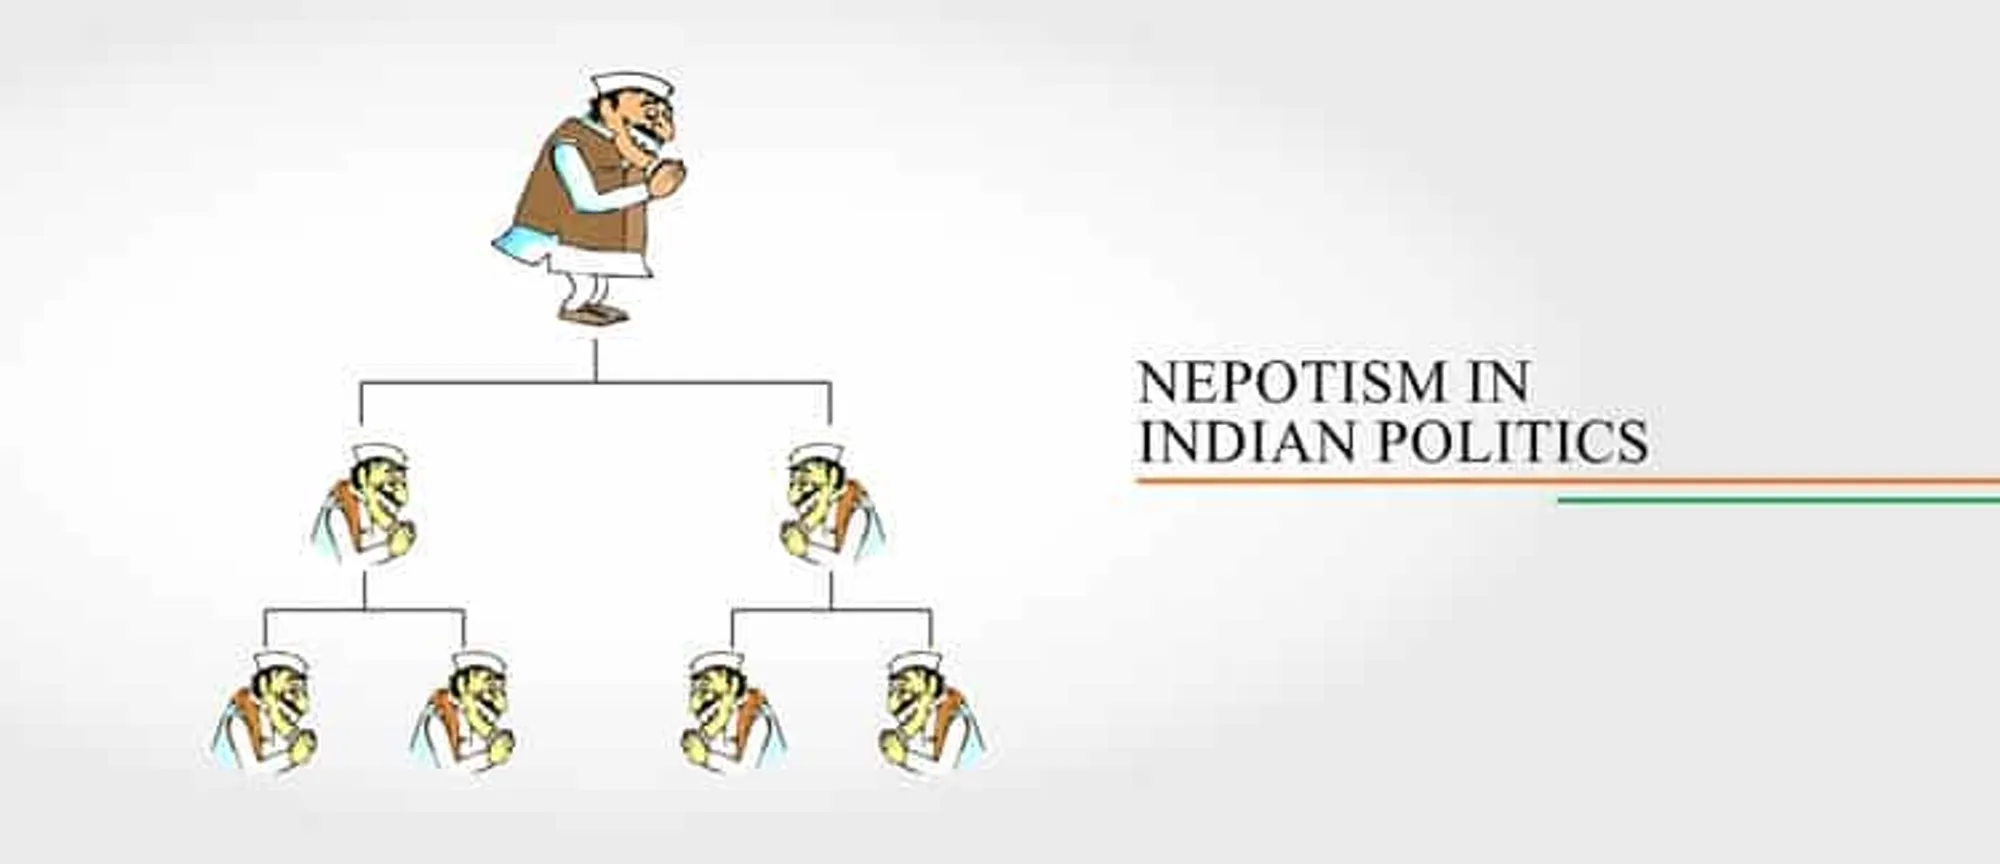 Nepotism in Indian politics